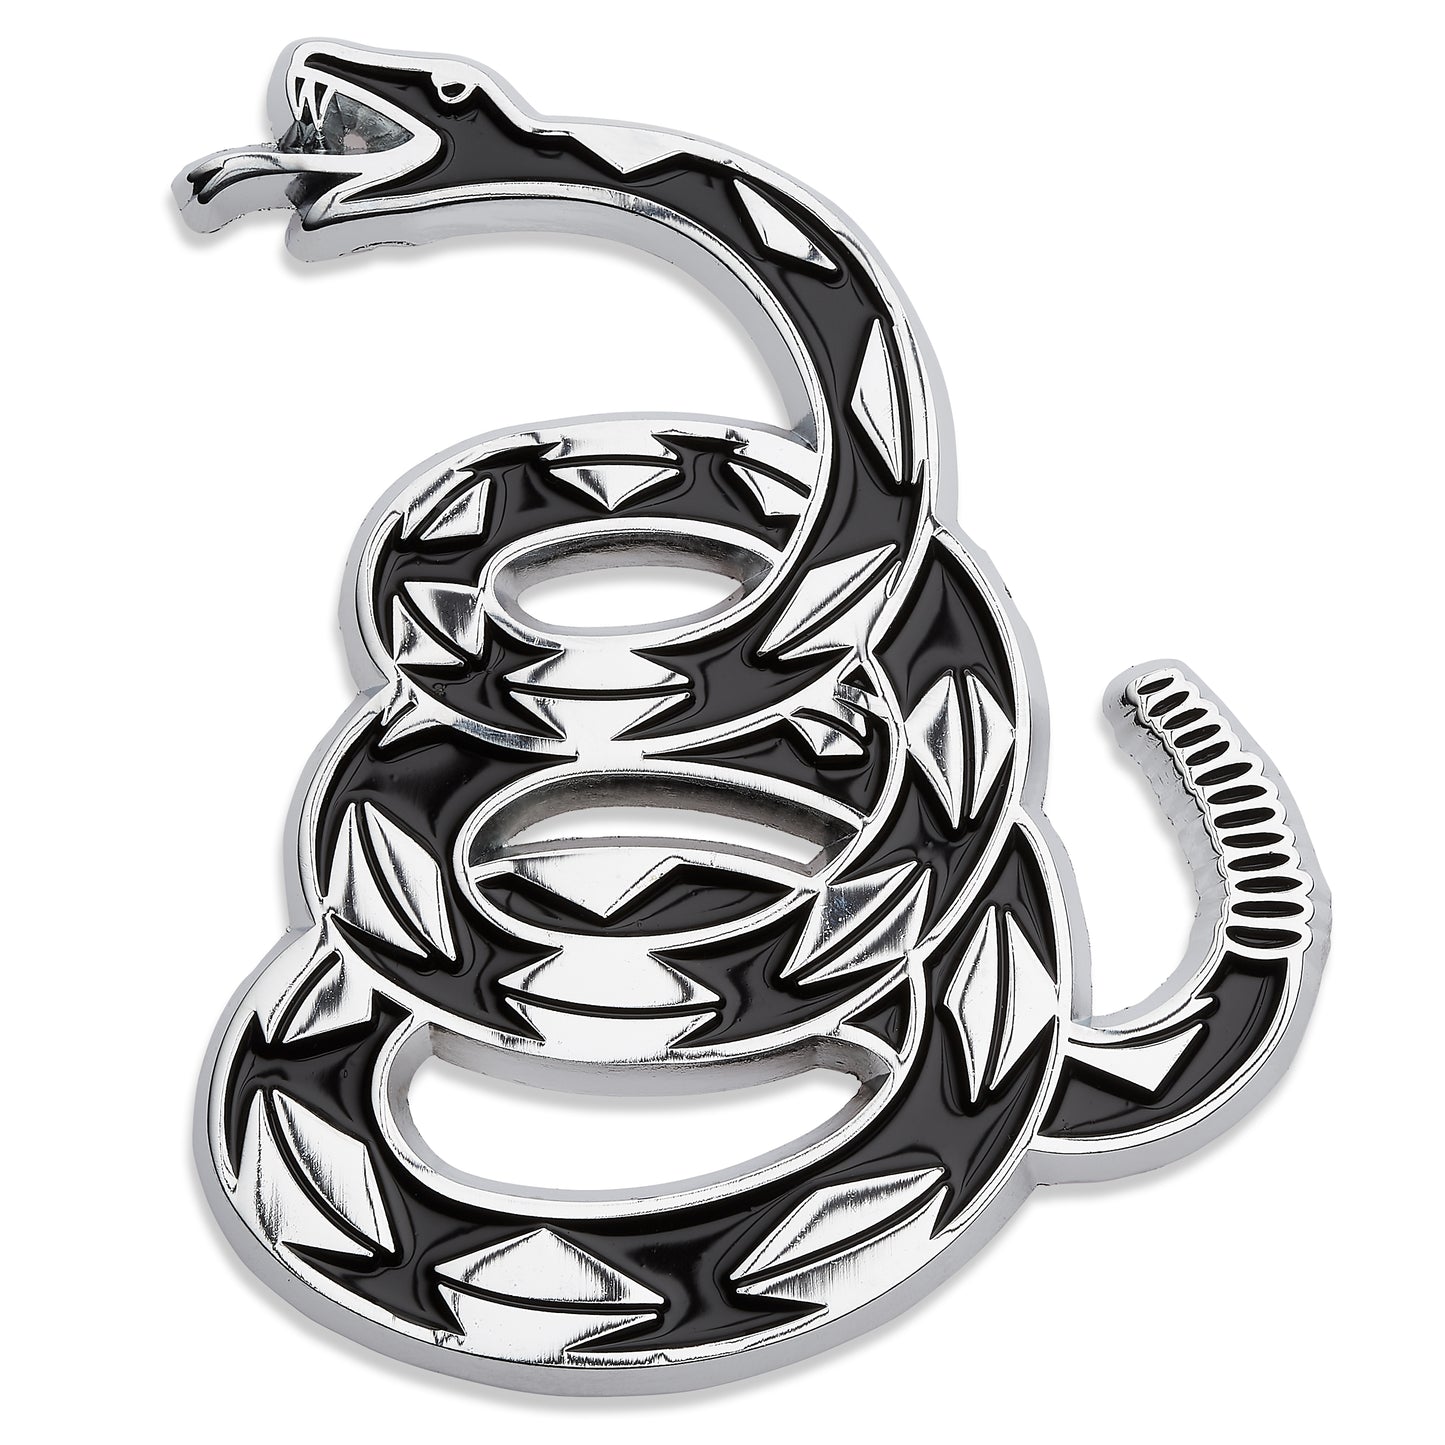 Gadsden "Don't Tread On Me Rattlesnake" Car Emblem (Chrome/Black)